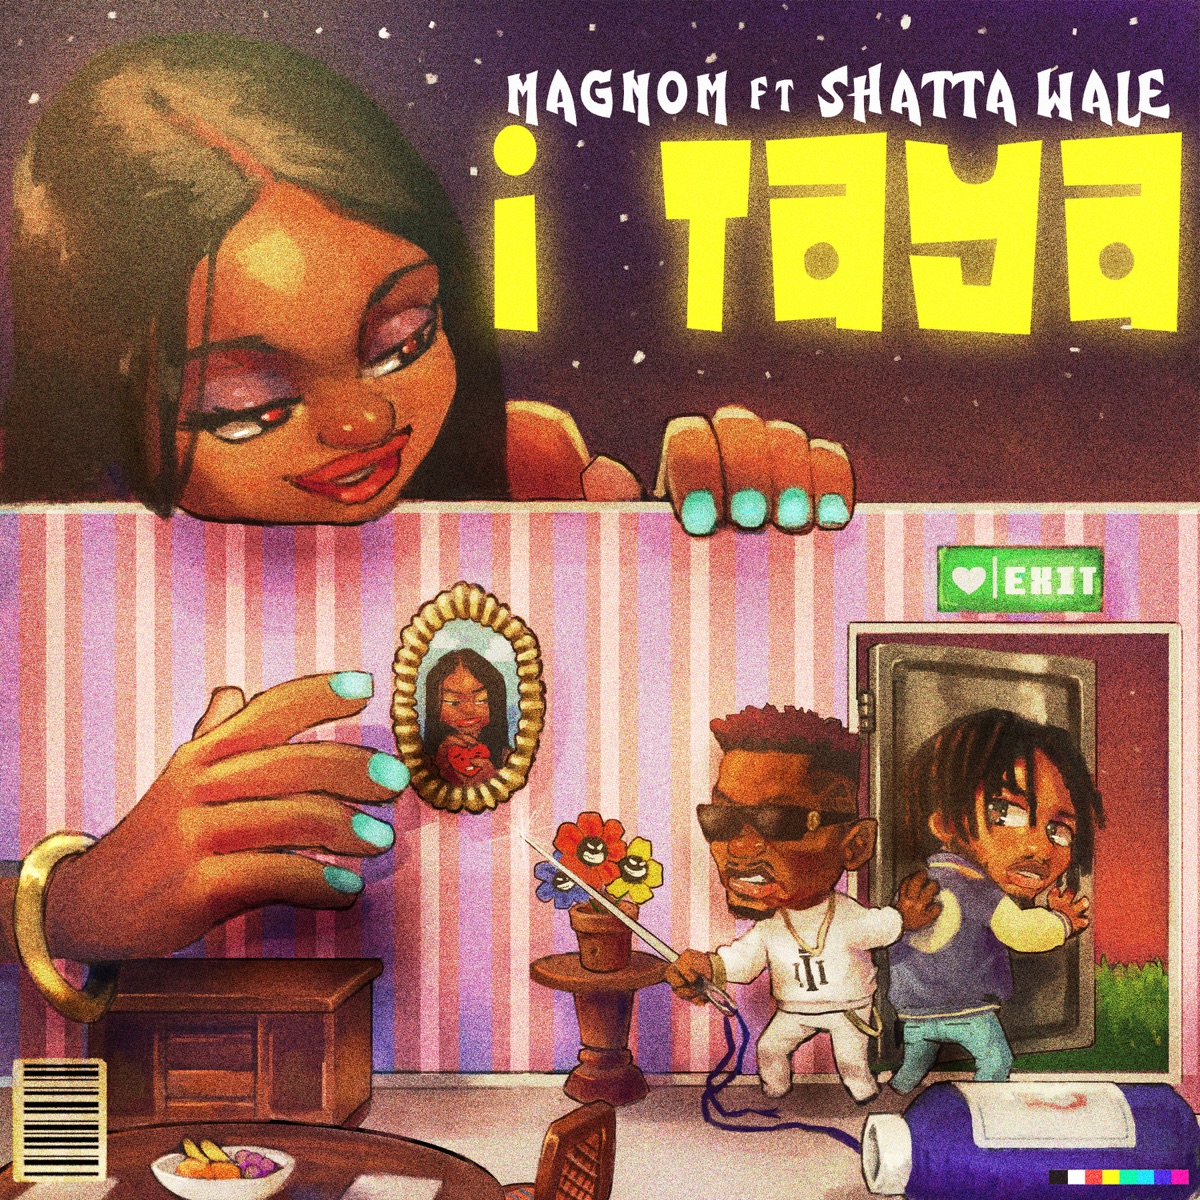 Shatta Wale - Tournament (Ghana Black Stars Remix): listen with